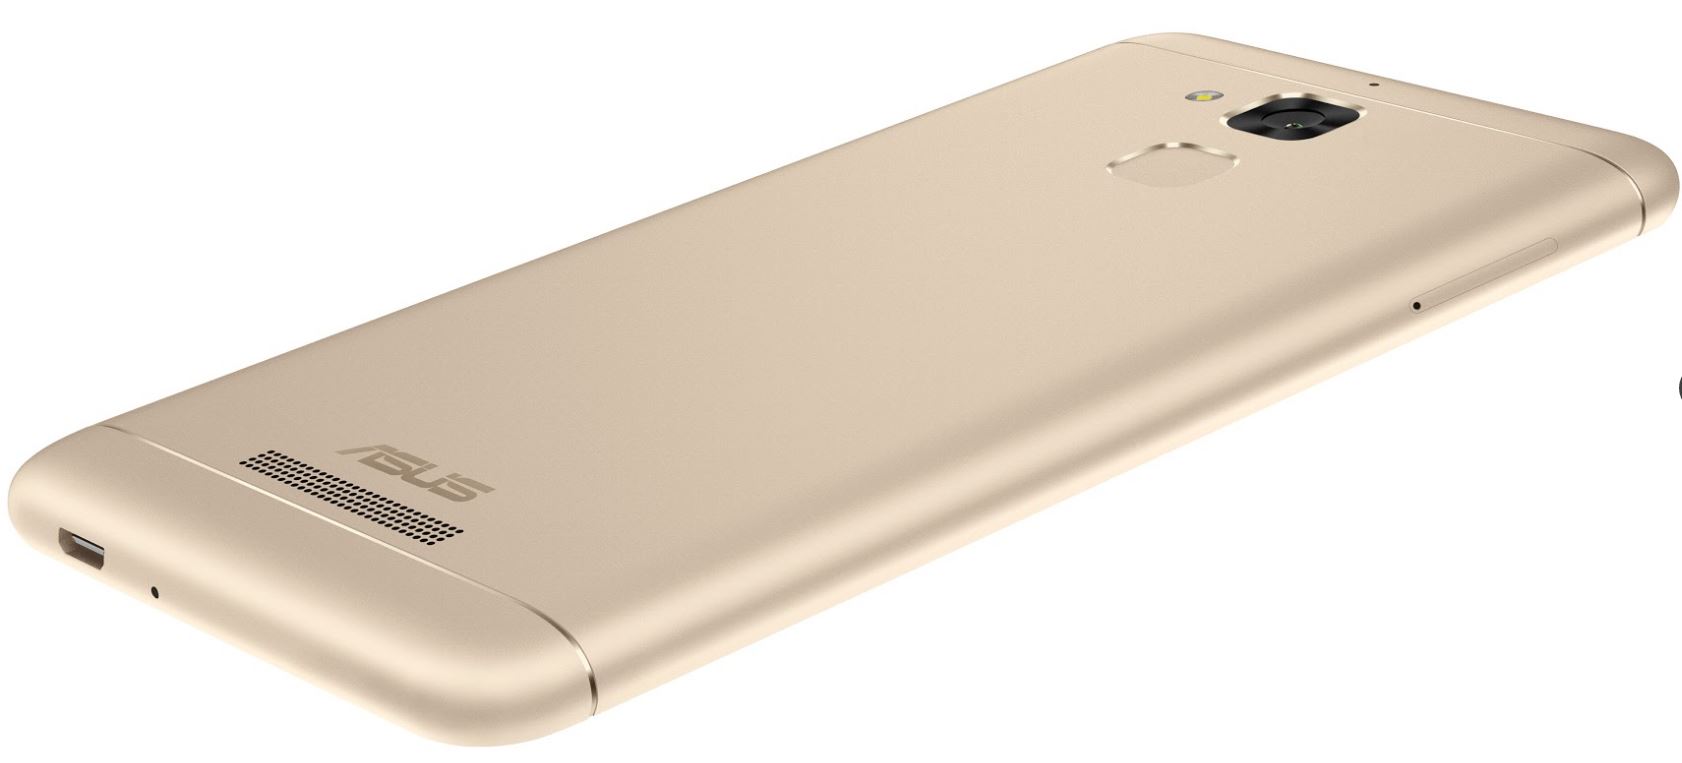 Zenfone 3 Max lên kệ: Pin 4130mAh, cảm biến vân tay, giá 4.5 triệu